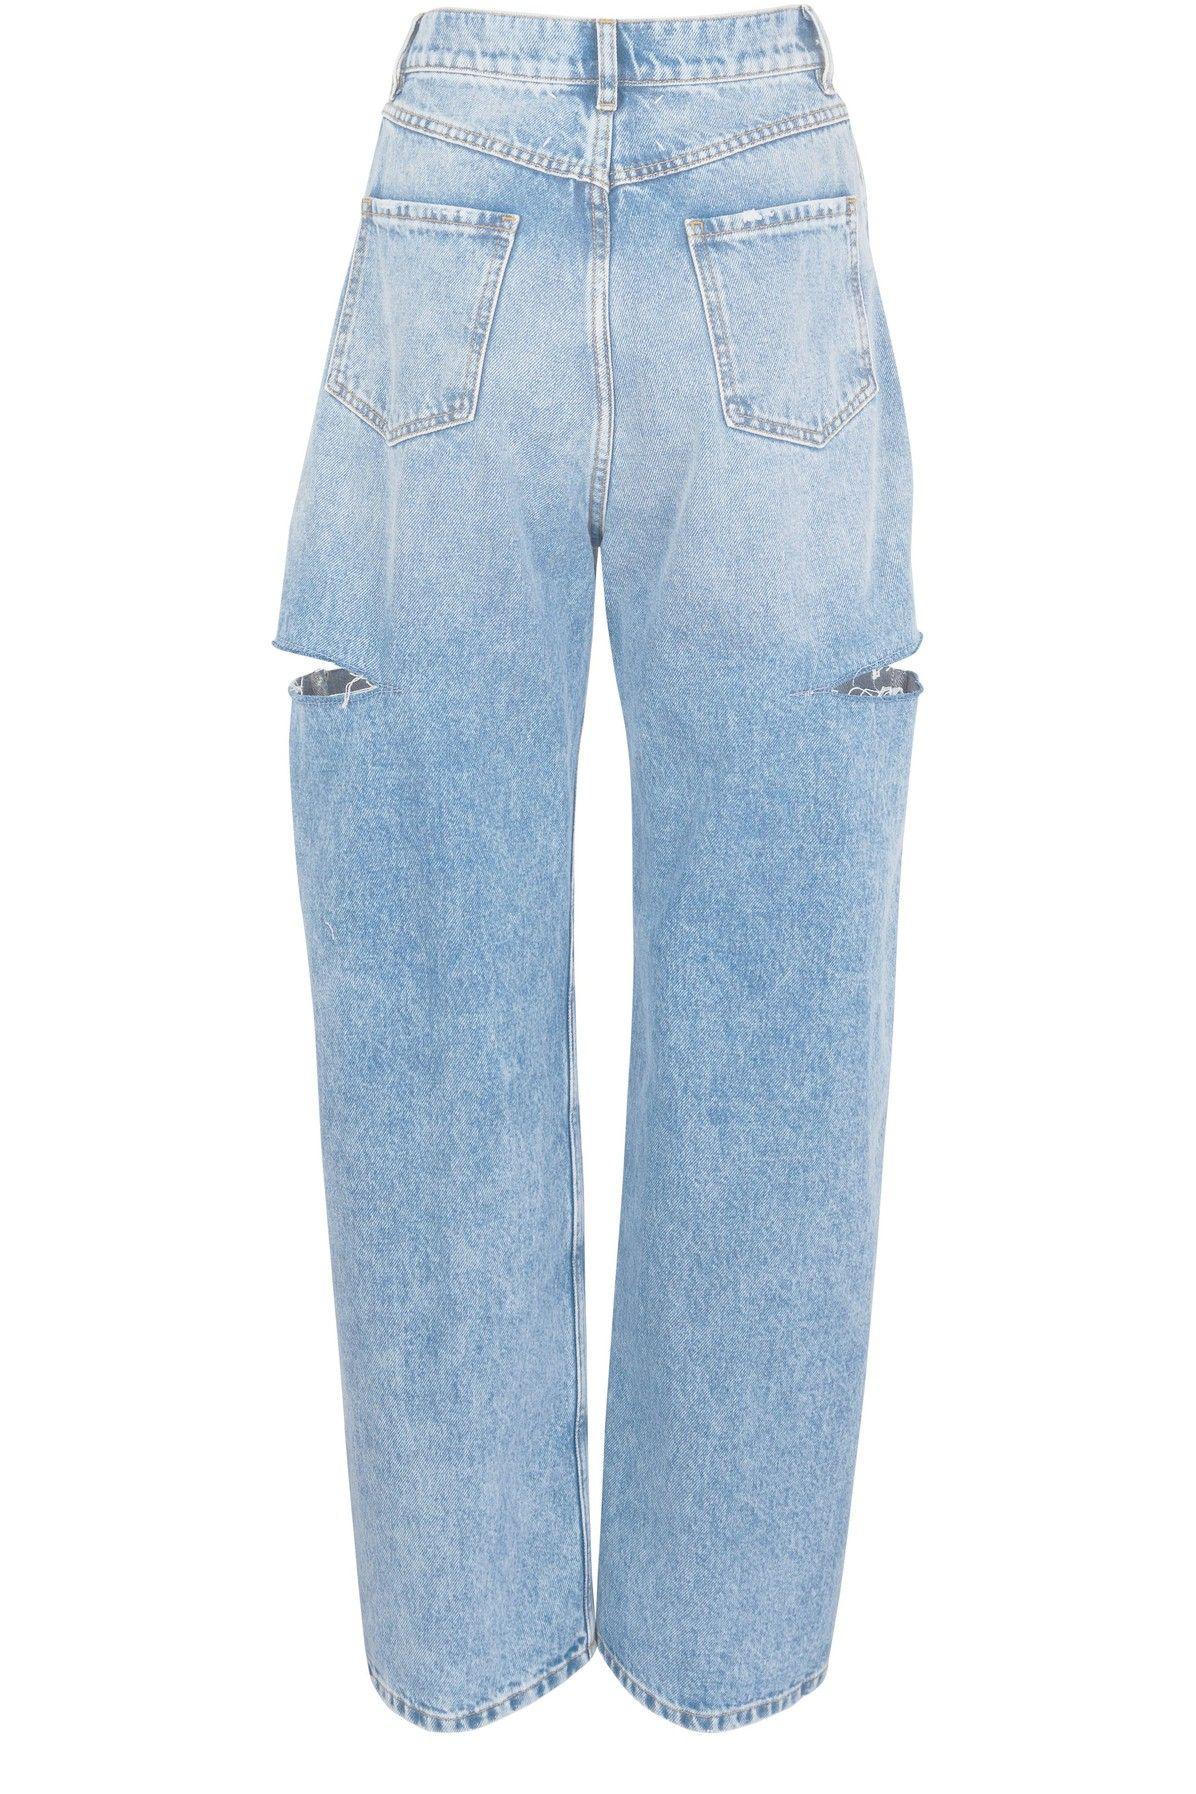 Maison Margiela Denim Jeans With Slash Details in Blue | Lyst